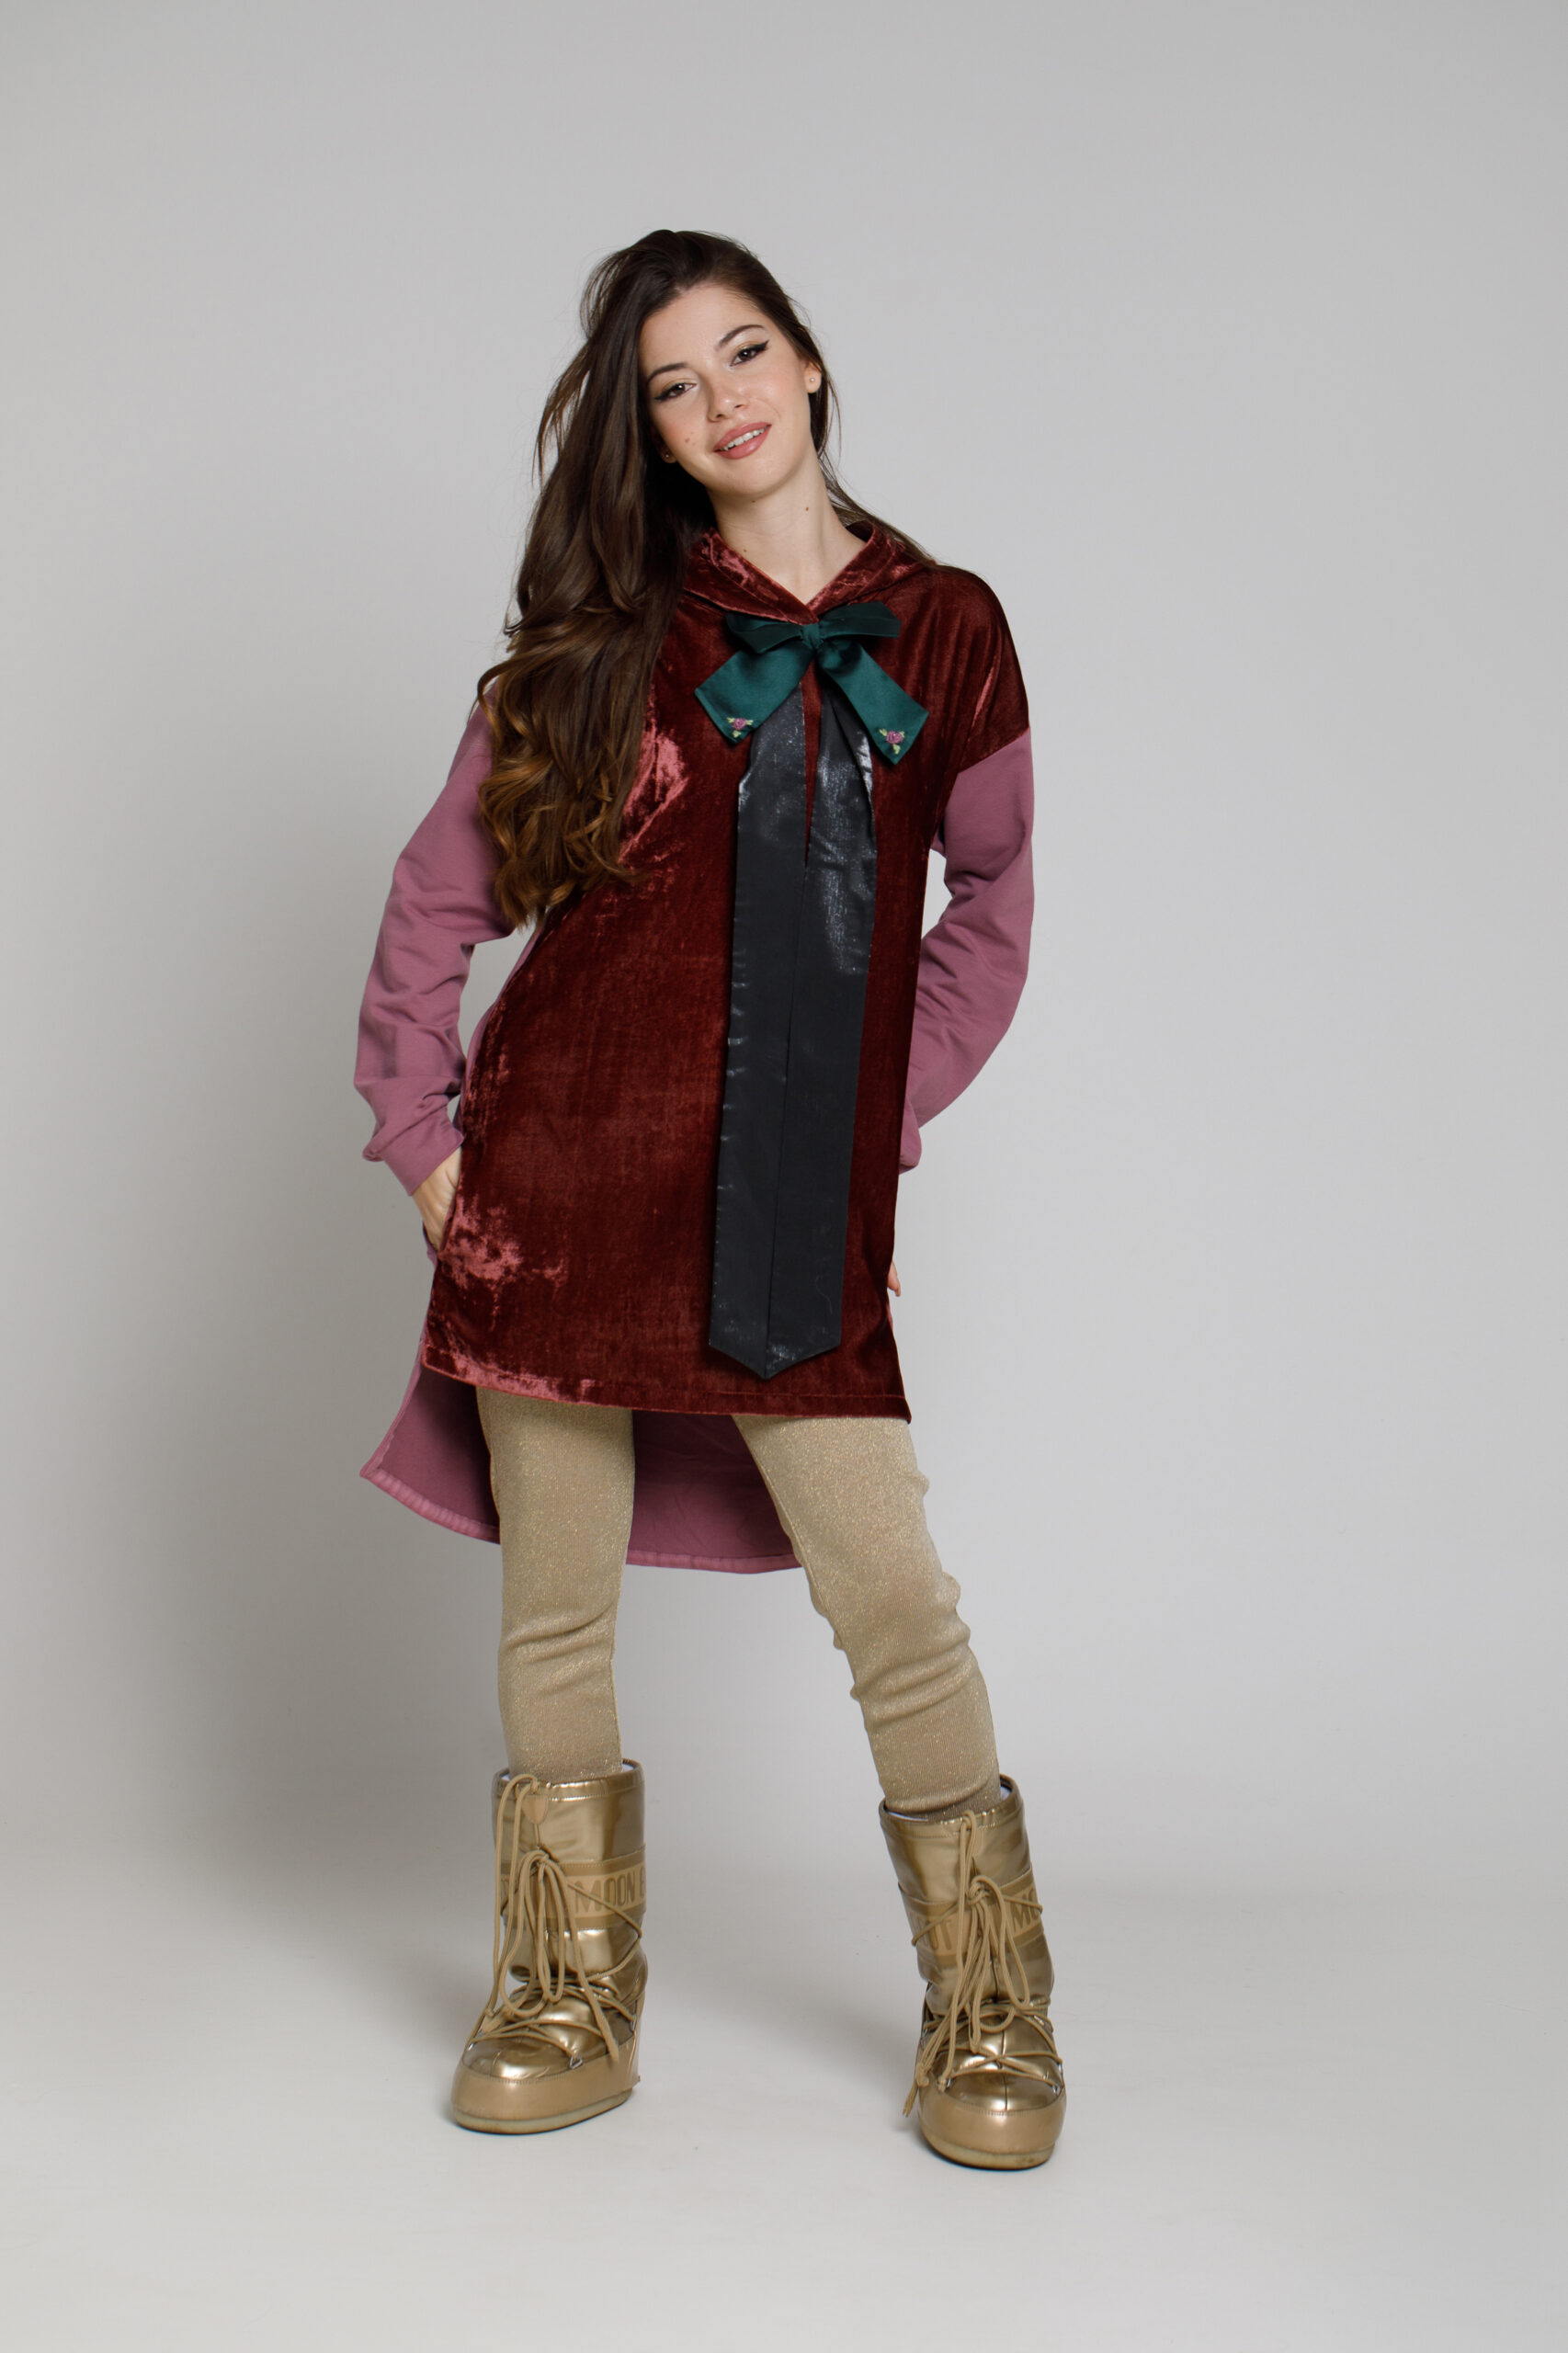 ALARY sweatshirt in burgundy velvet. Natural fabrics, original design, handmade embroidery